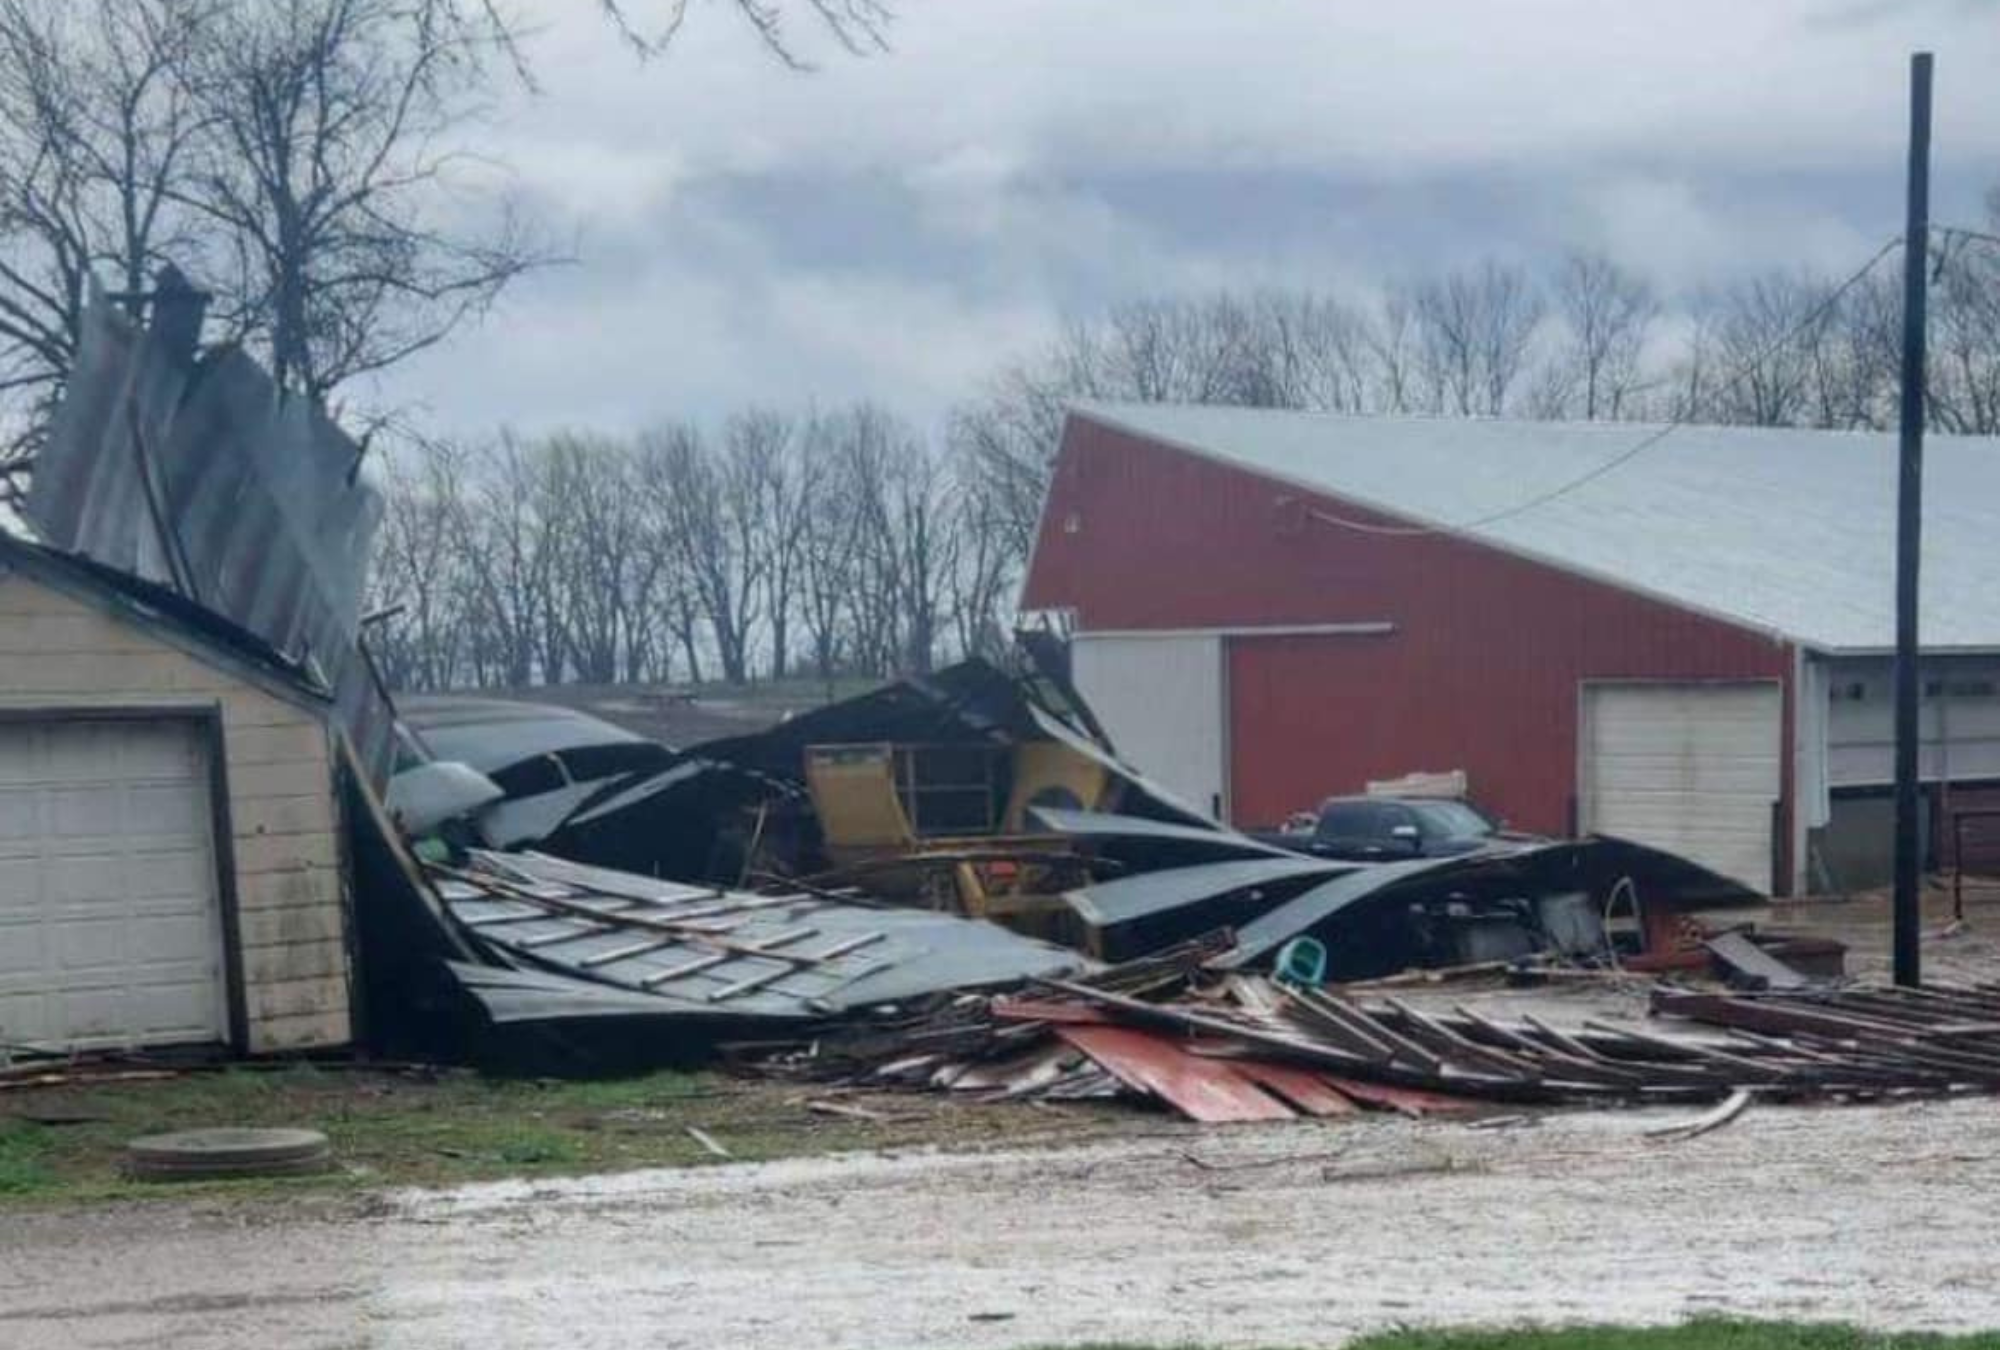 Videos capture tornado aftermath of destruction at Iowa homes, farms